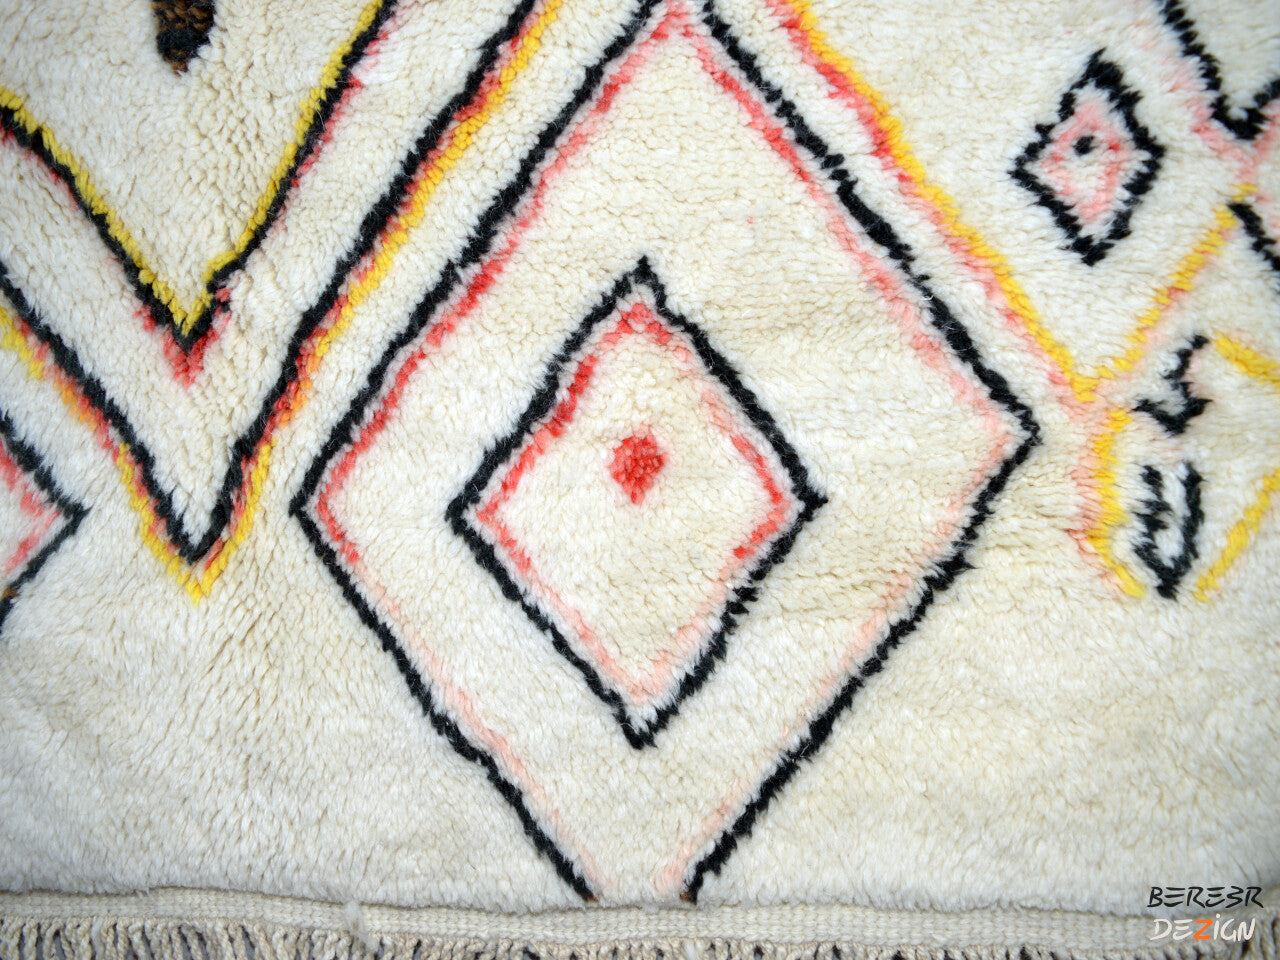 Fading Pattern on White Berber Carpet_A1003 BerberDezign